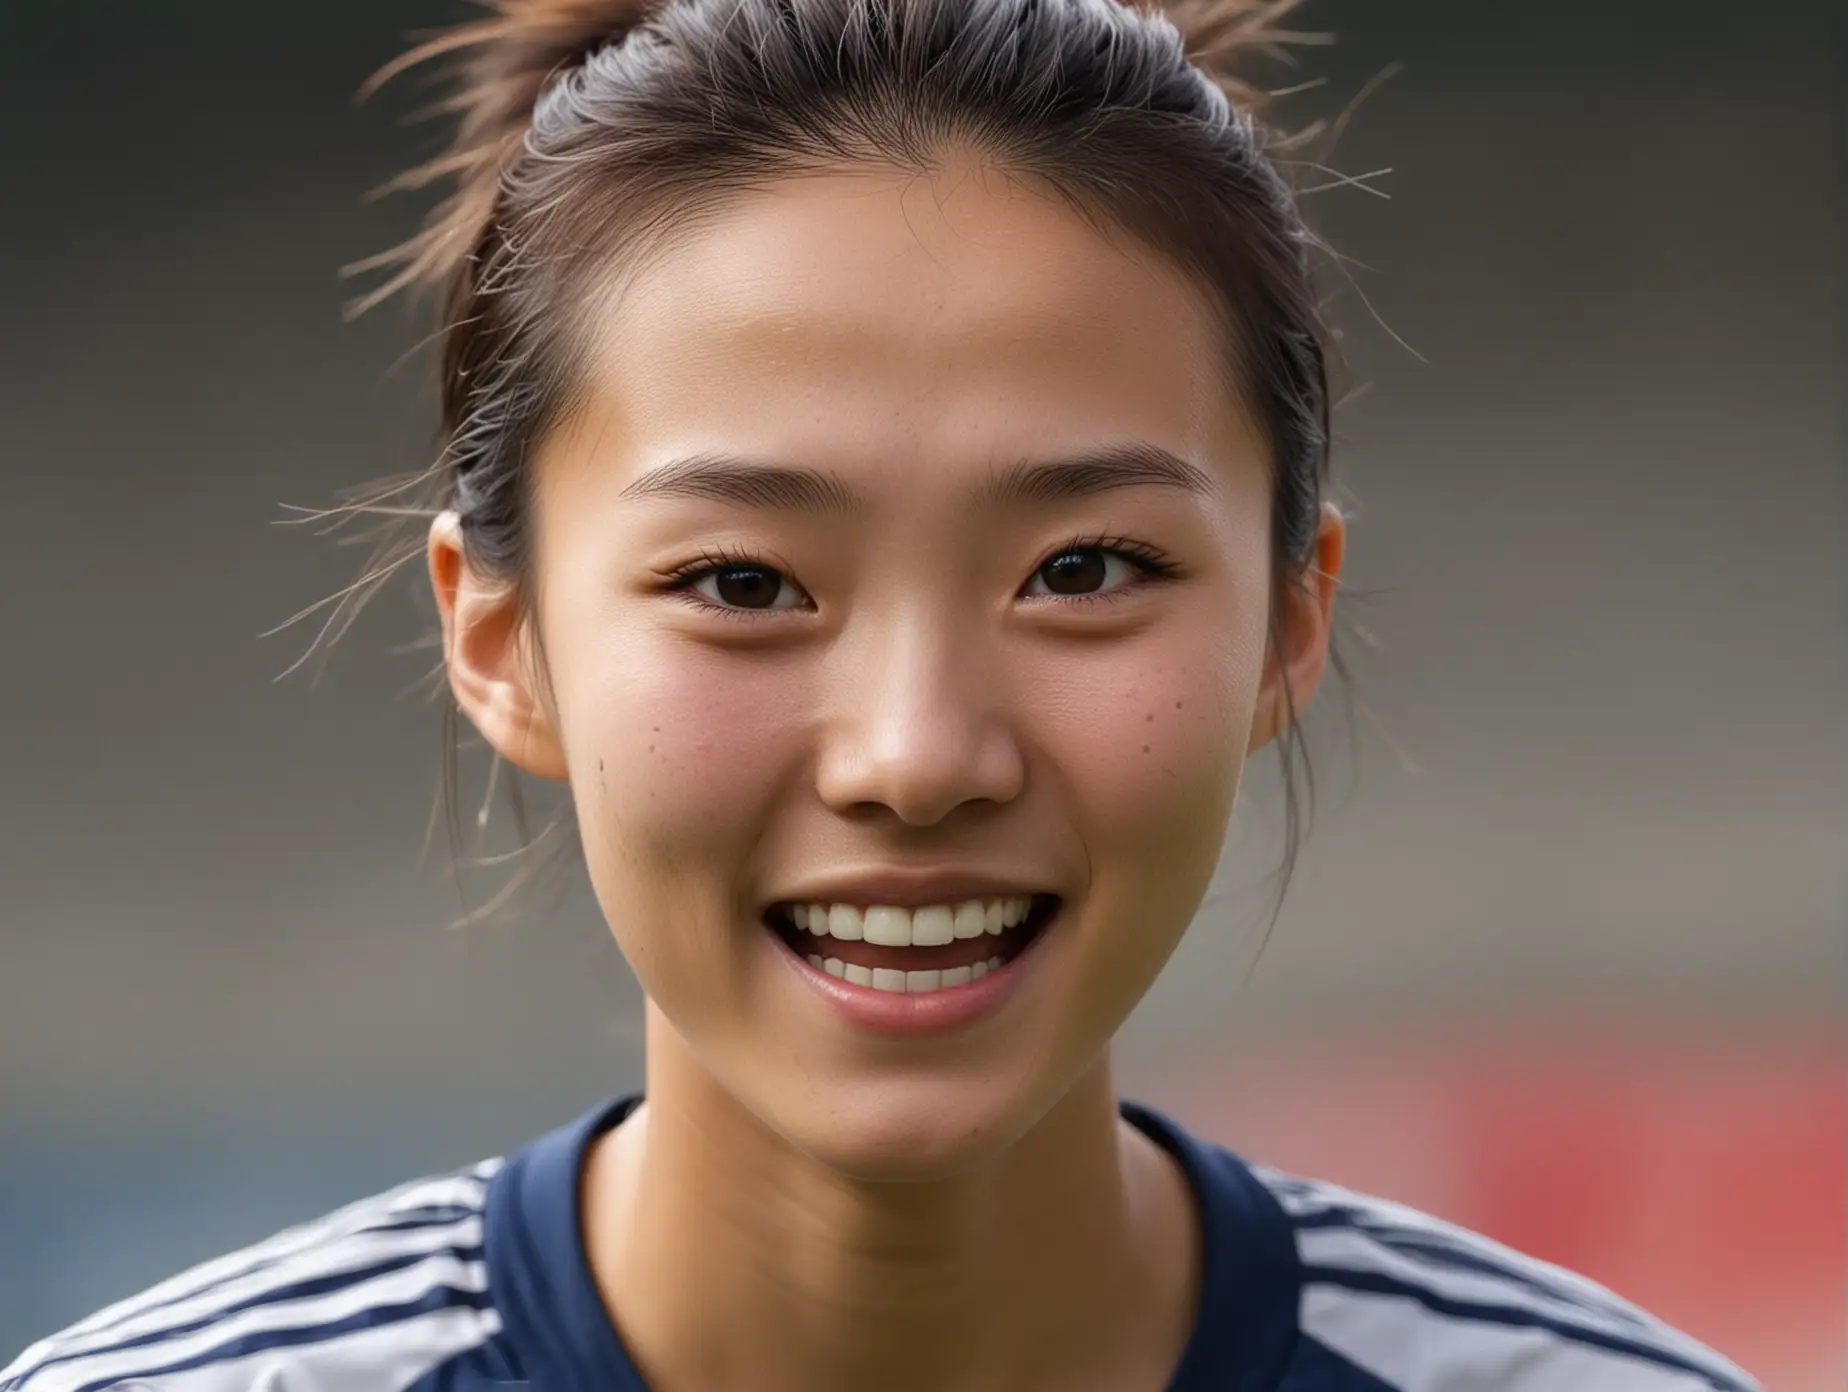 Joyful-Celebration-Natural-Beauty-of-Chinese-Soccer-Player